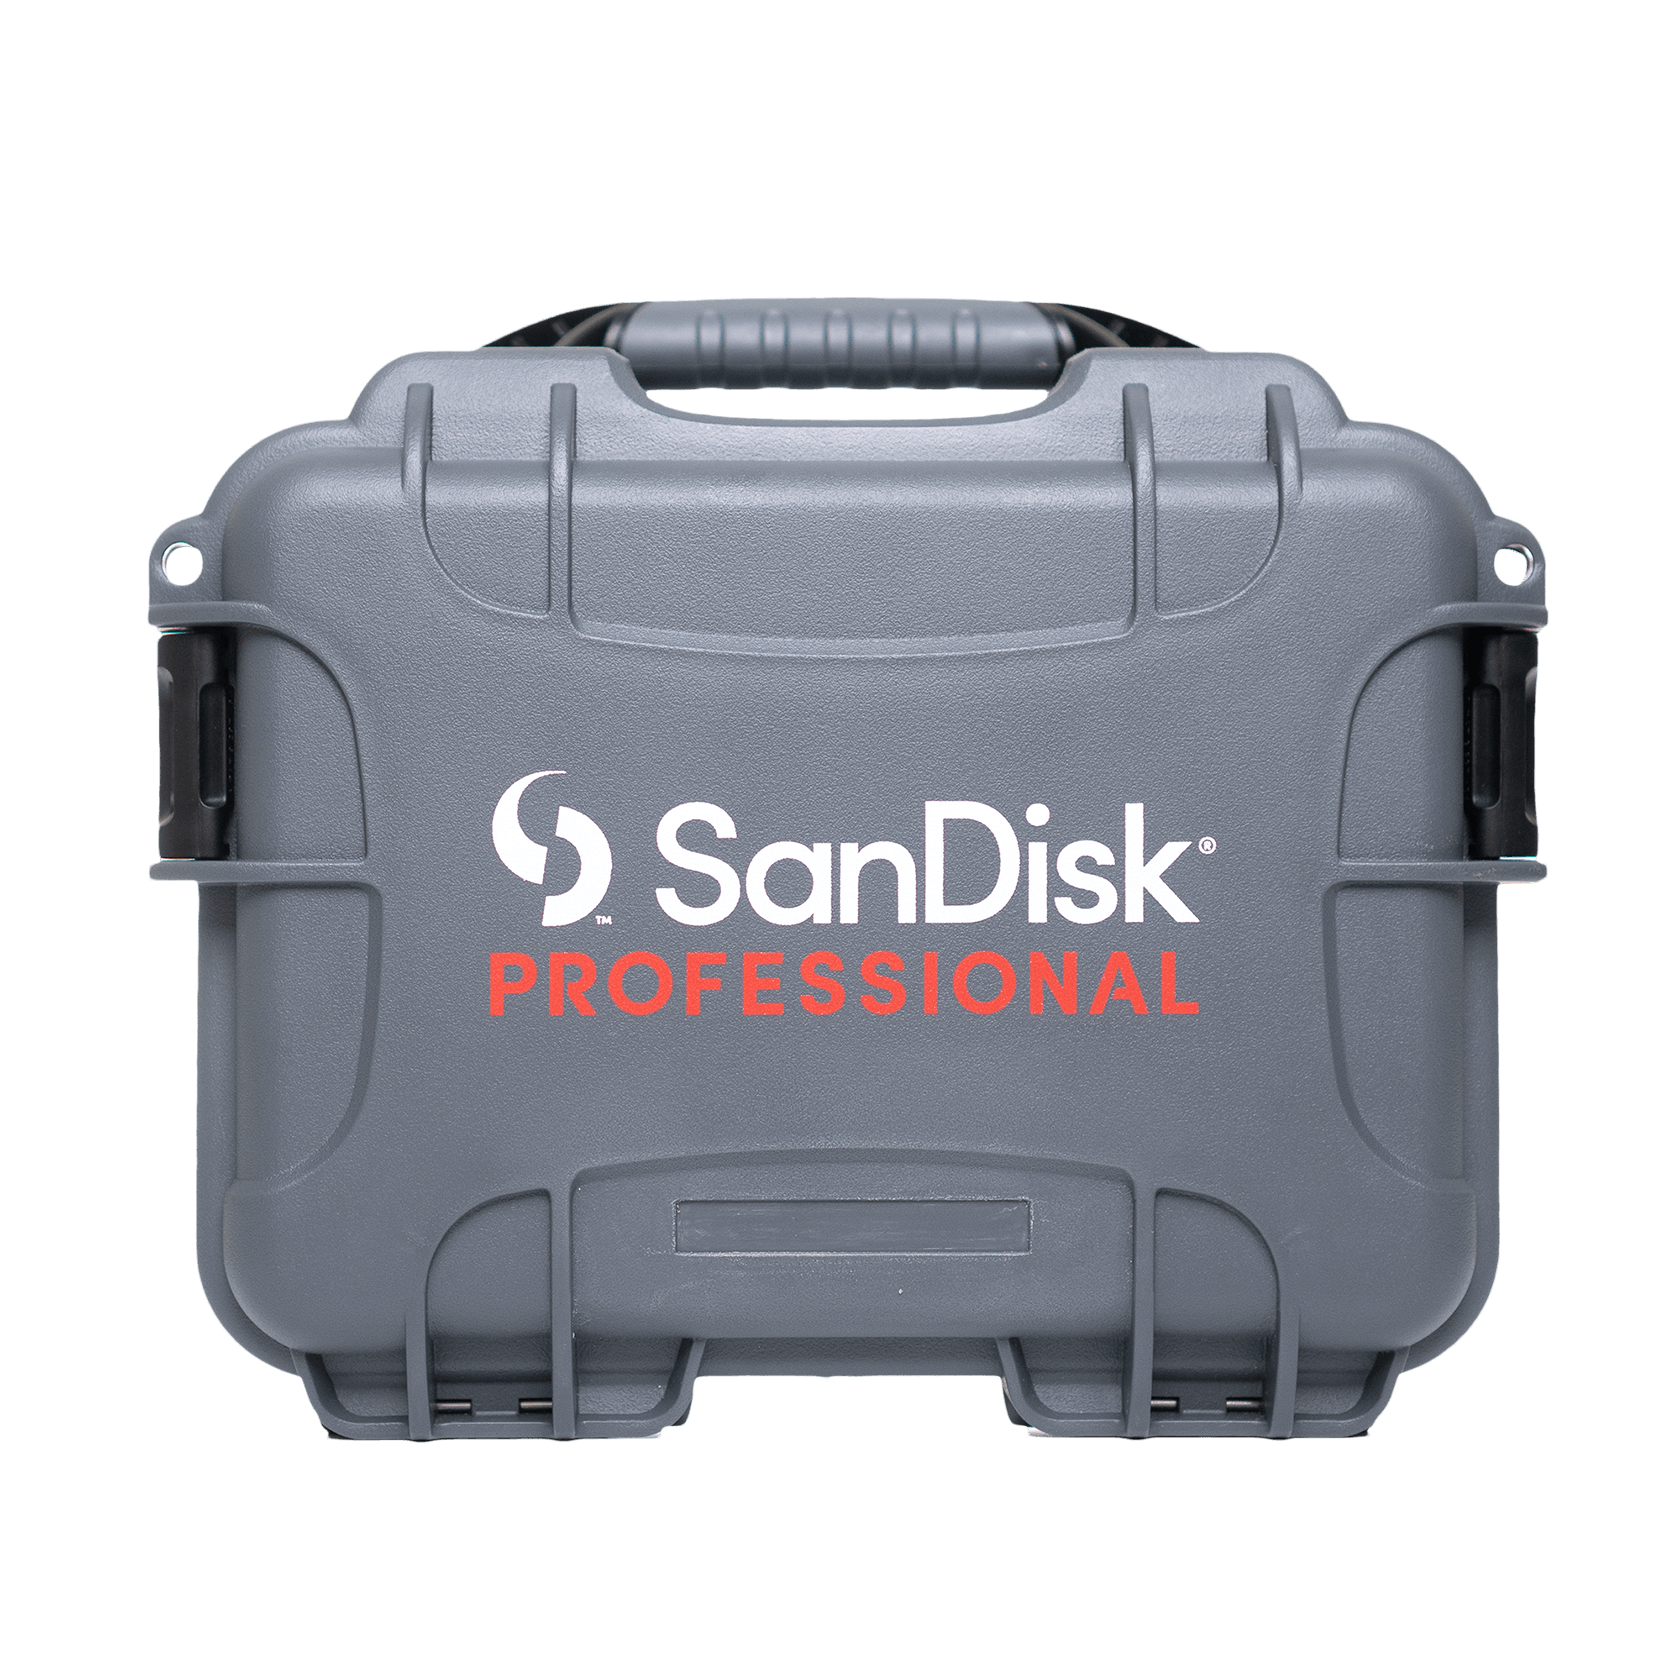 SanDisk Professional 259.08mm X 200.66mm X 114.3mm PROBLADE Hard Case - WDCC017RNW